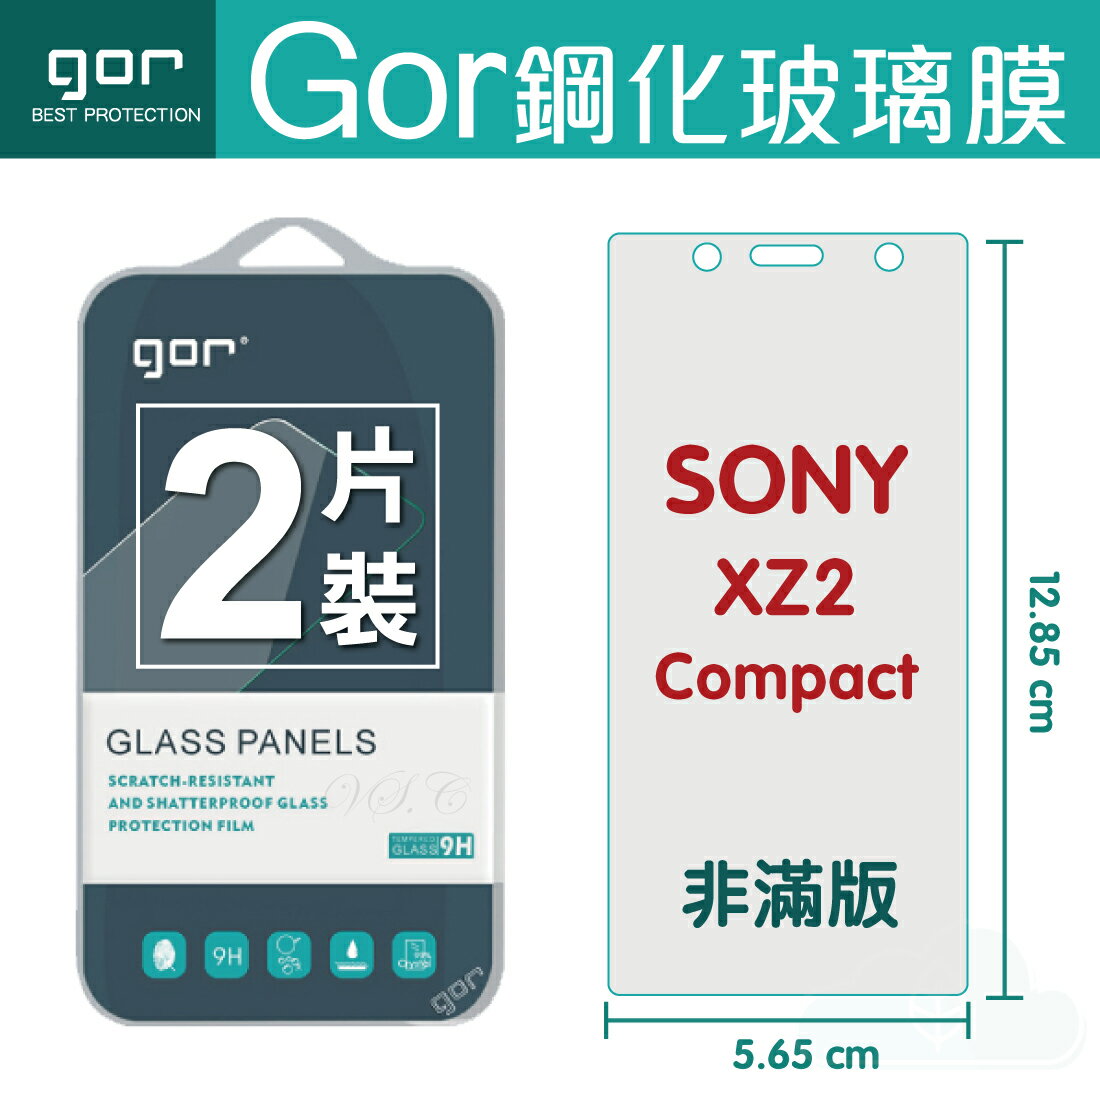 【SONY】GOR 9H SONY Xperia XZ2 Compact 鋼化 玻璃 保護貼 全透明非滿版 兩片裝【全館滿299免運費】